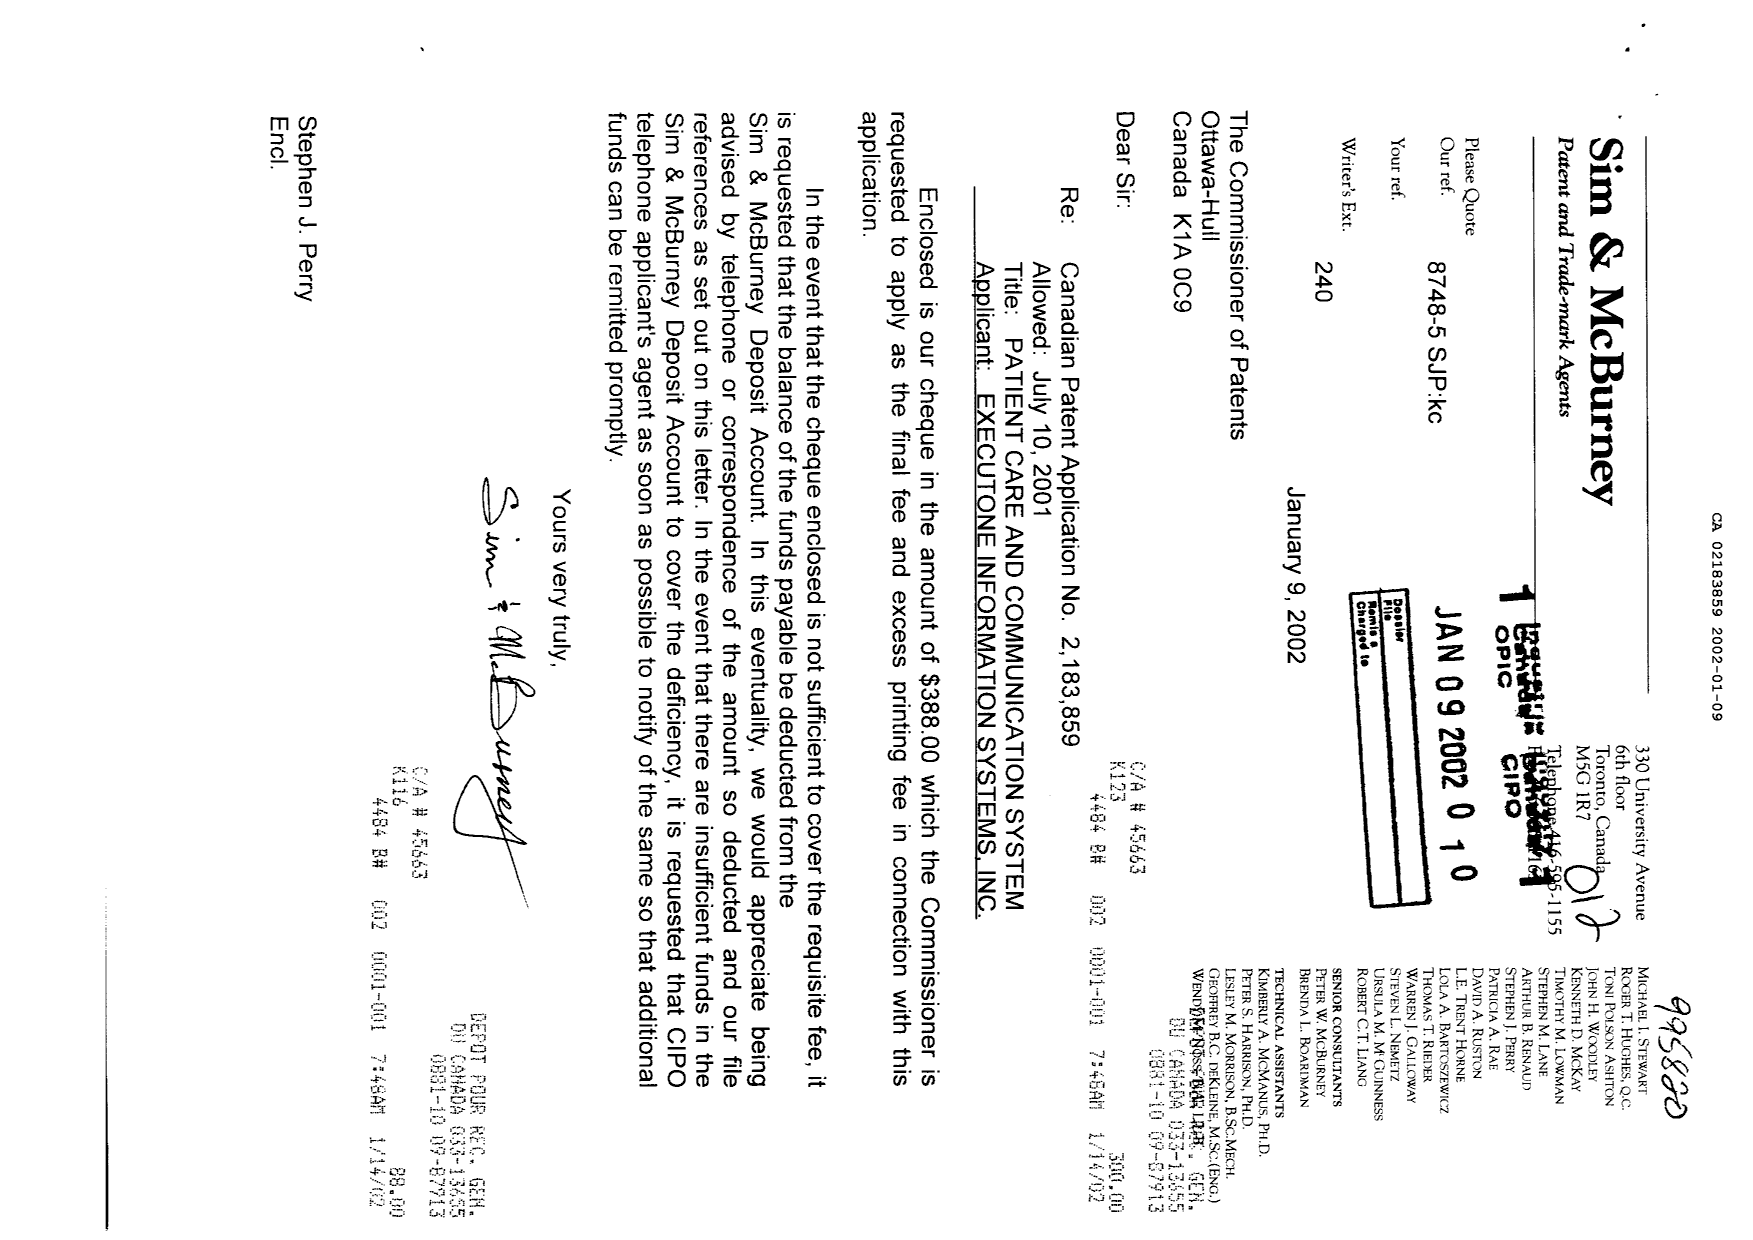 Canadian Patent Document 2183859. Correspondence 20020109. Image 1 of 1